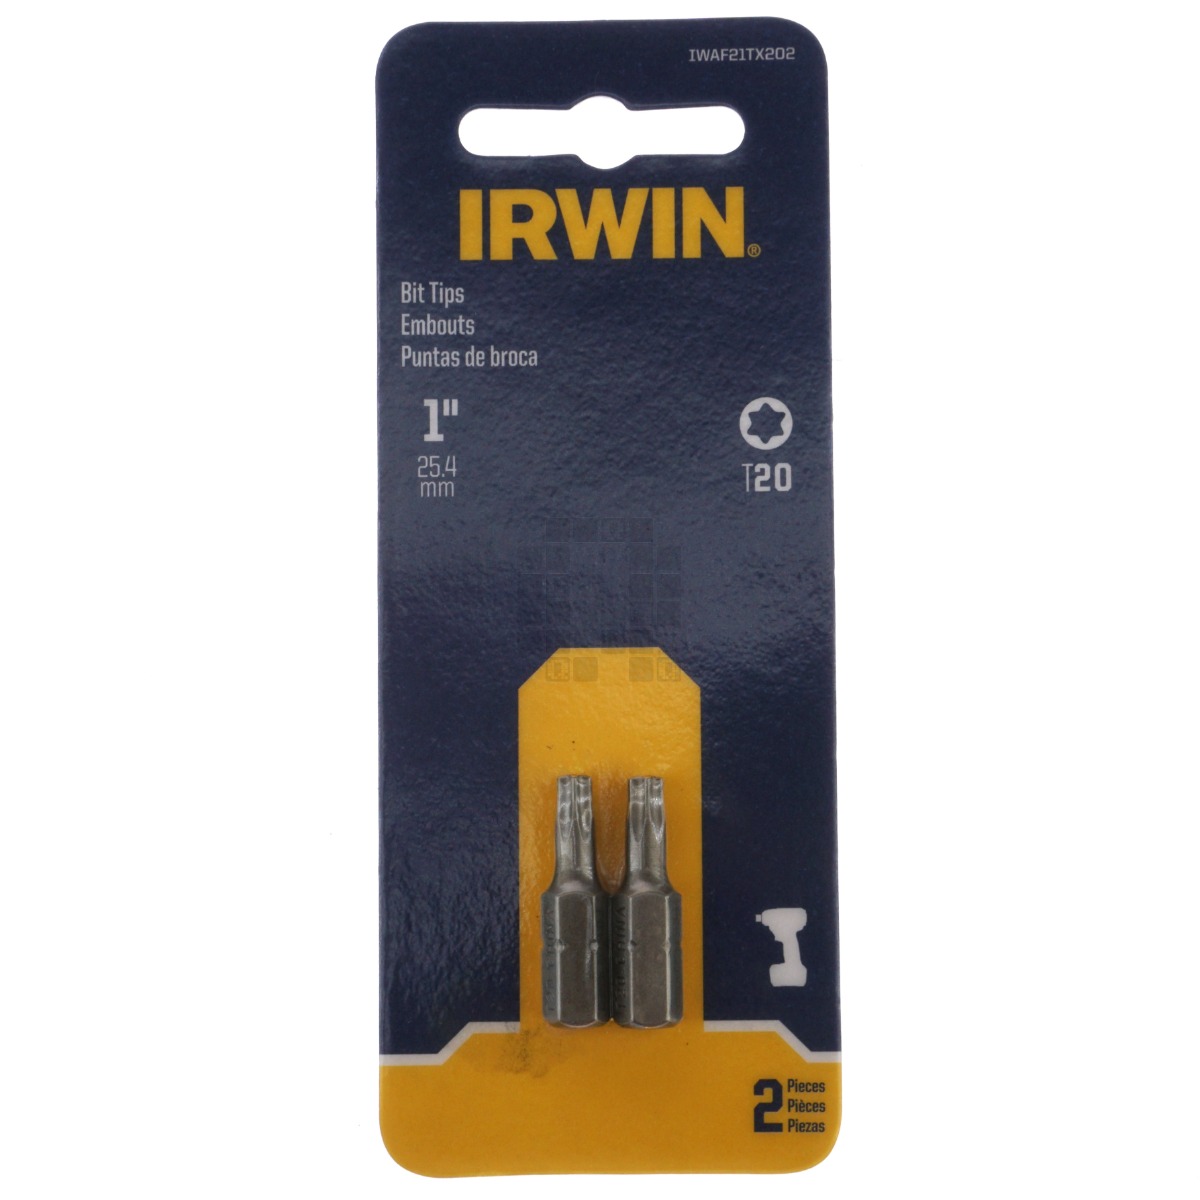 Irwin IWAF21TX202 T20 Torx Bit Tips, 2 Pack, 1" Length